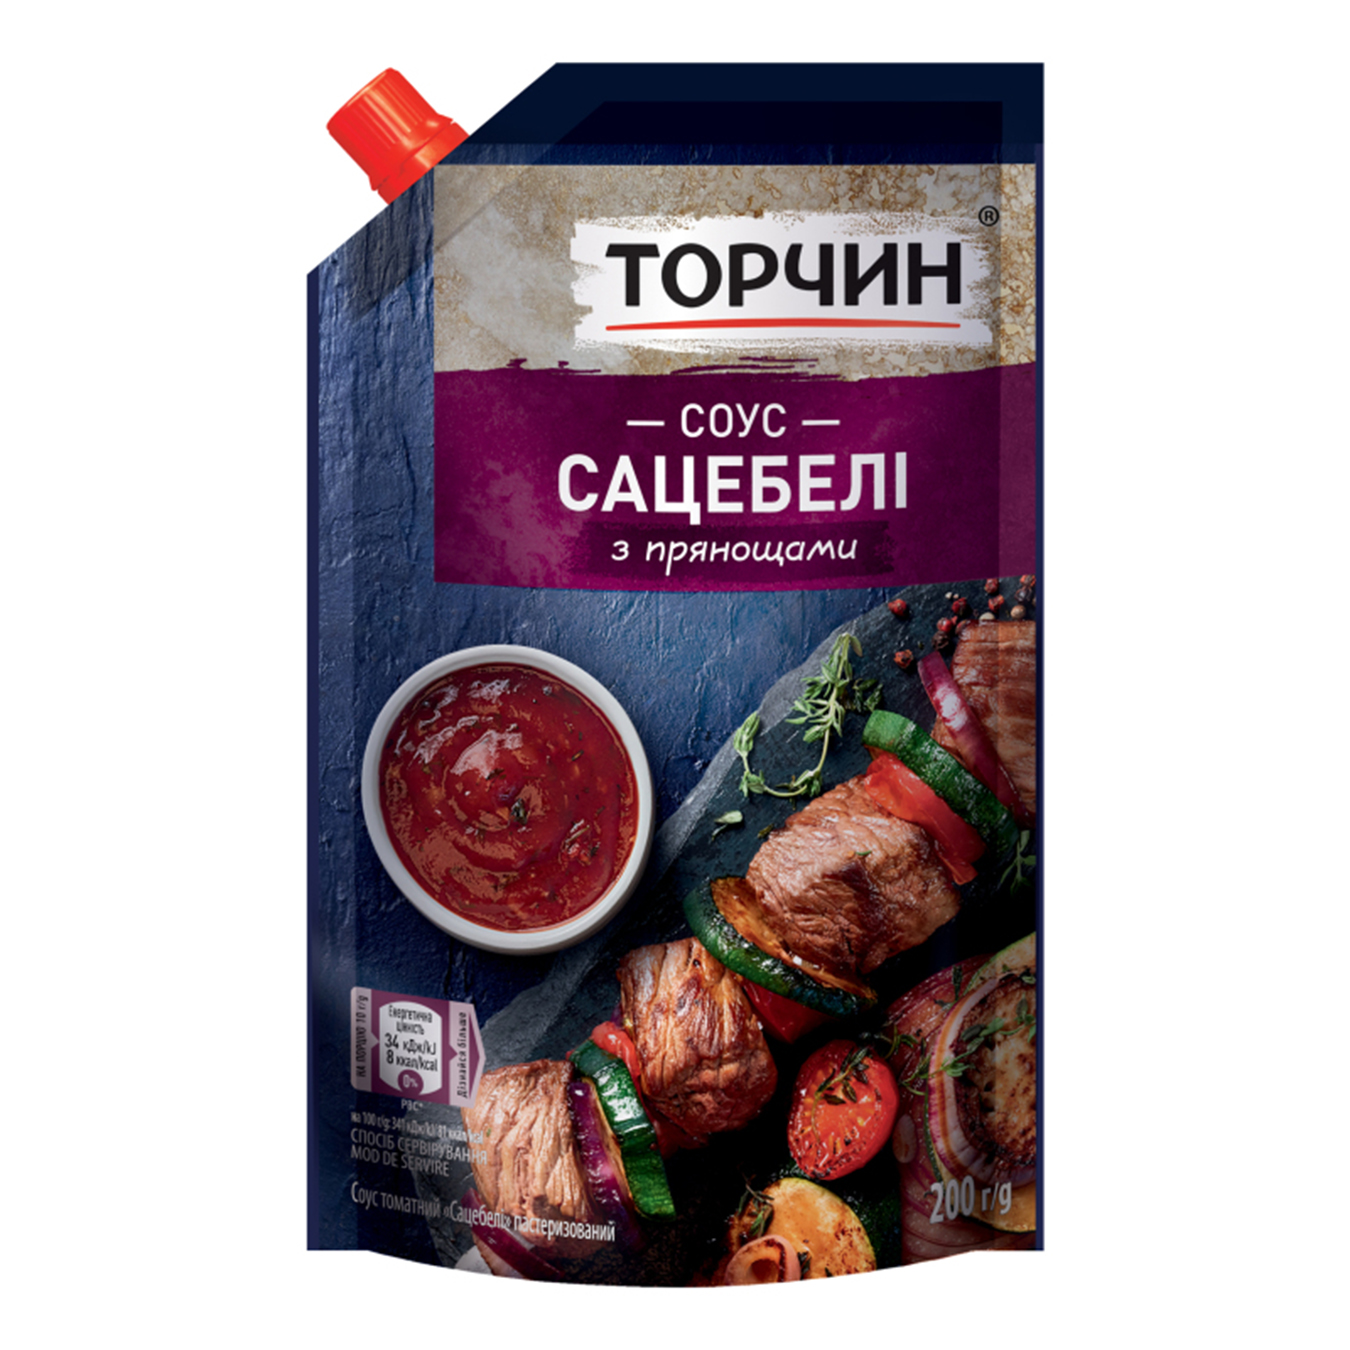 Torchyn Satsebeli sauce 200g